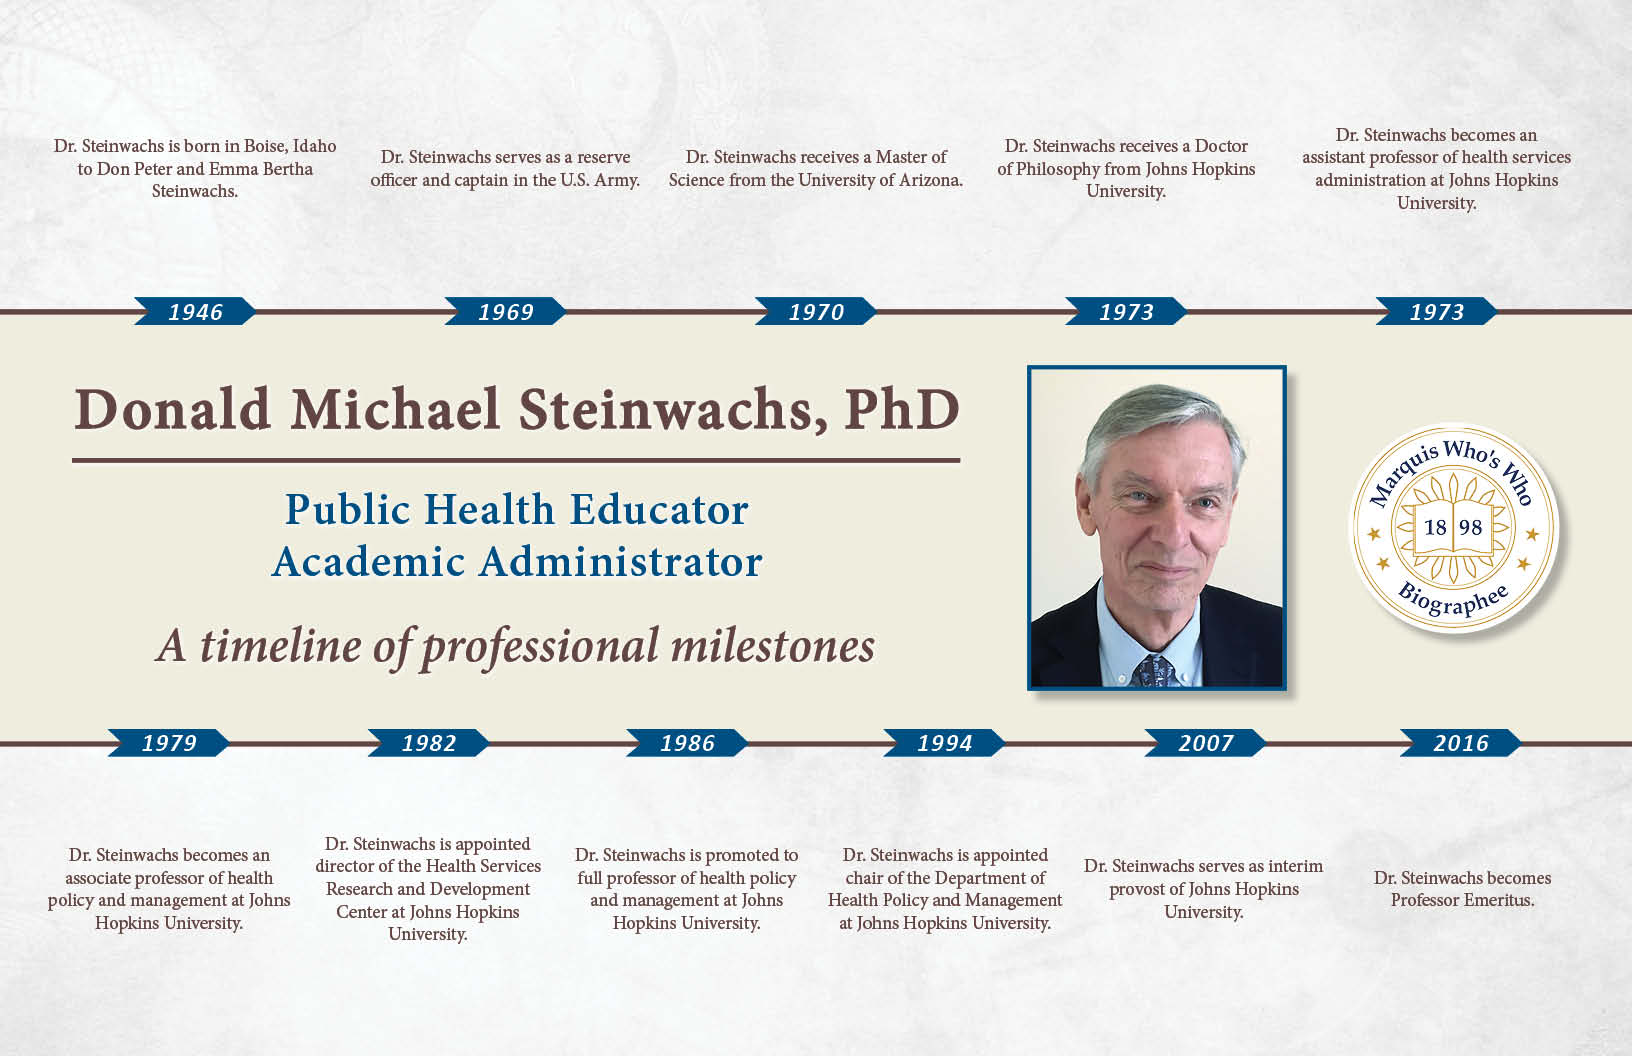 Donald Steinwachs Professional Milestones